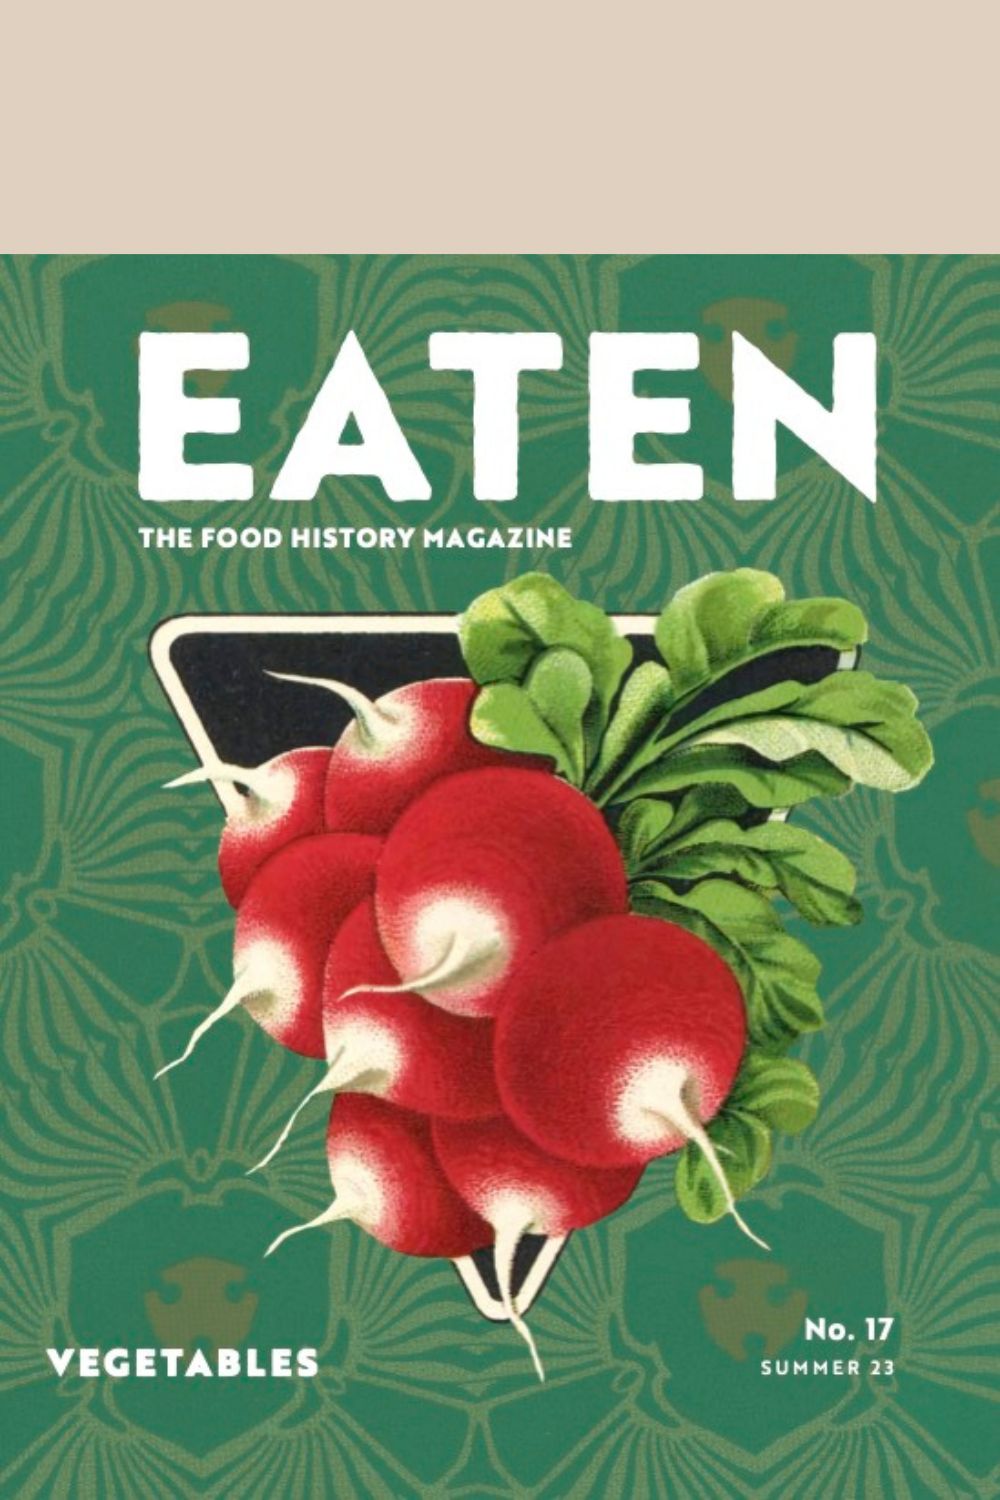 Eaten Magazine No. 17 Vegetables - cover